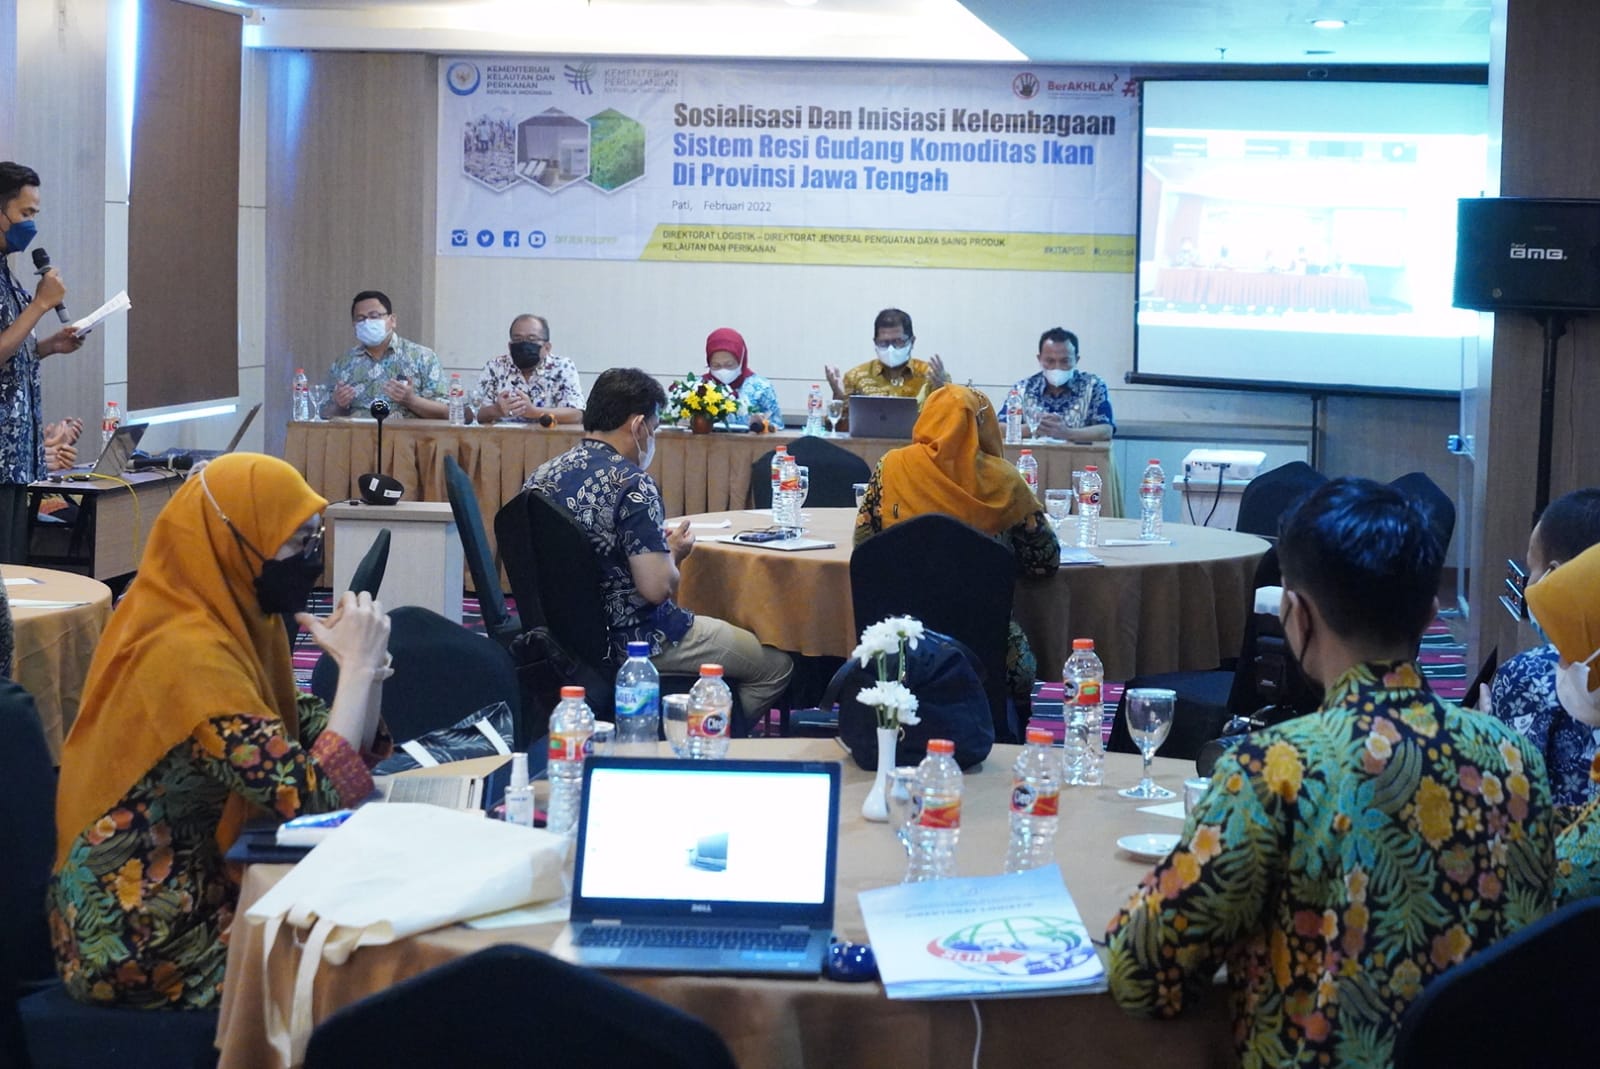 Sosialisasi dan Inisiasi Kelembagaan SRG Komoditas Ikan di Provinsi Jawa Tengah